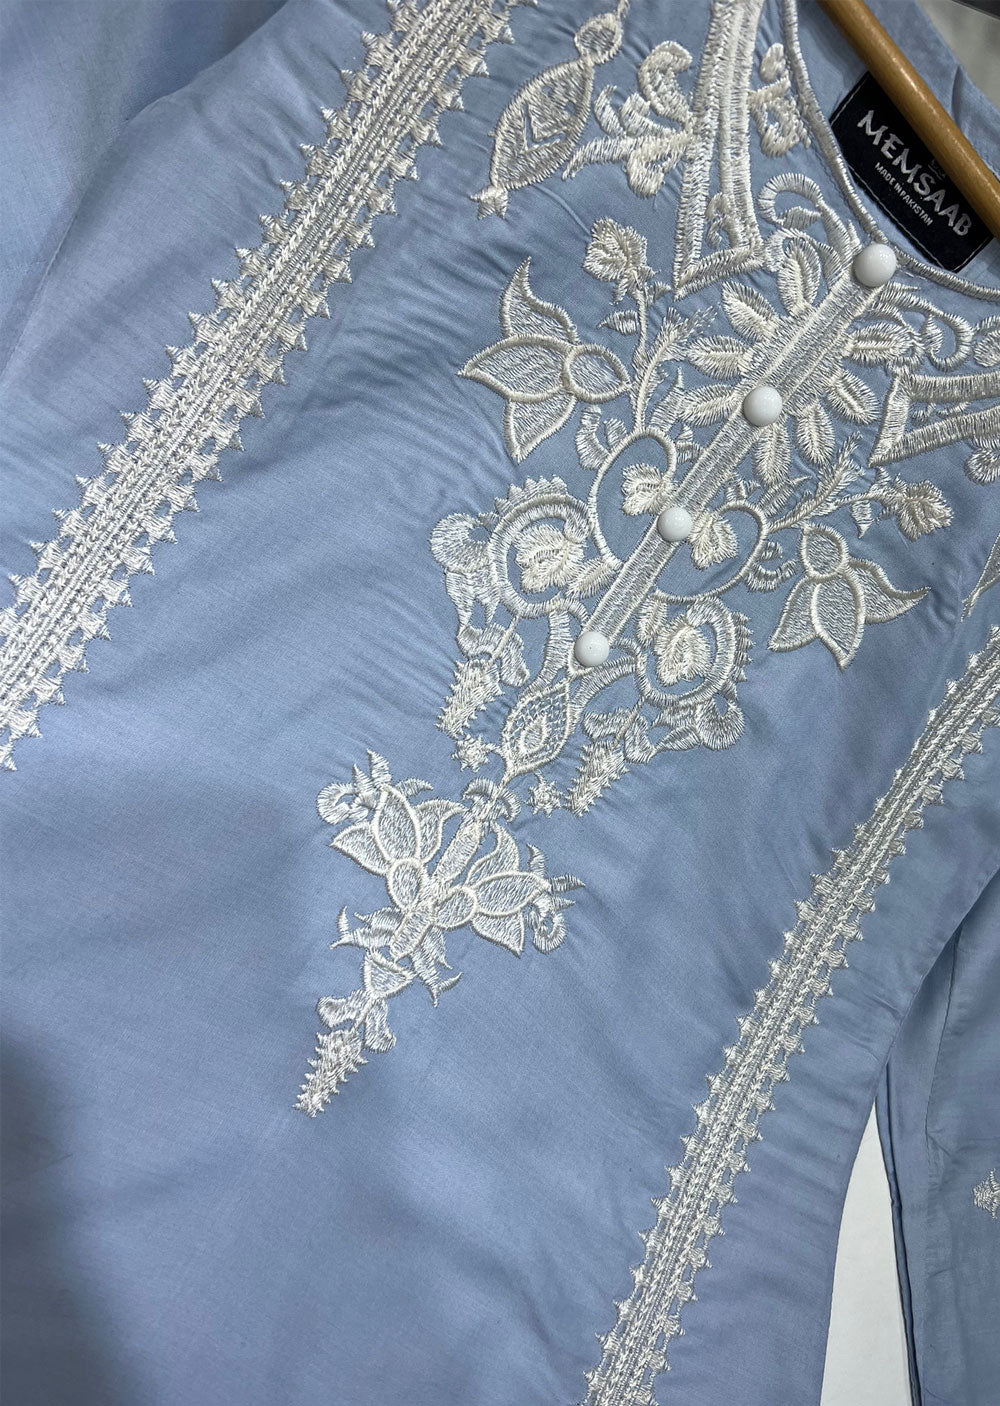 HK156 Lazza - Readymade Light Blue Linen Suit - Memsaab Online